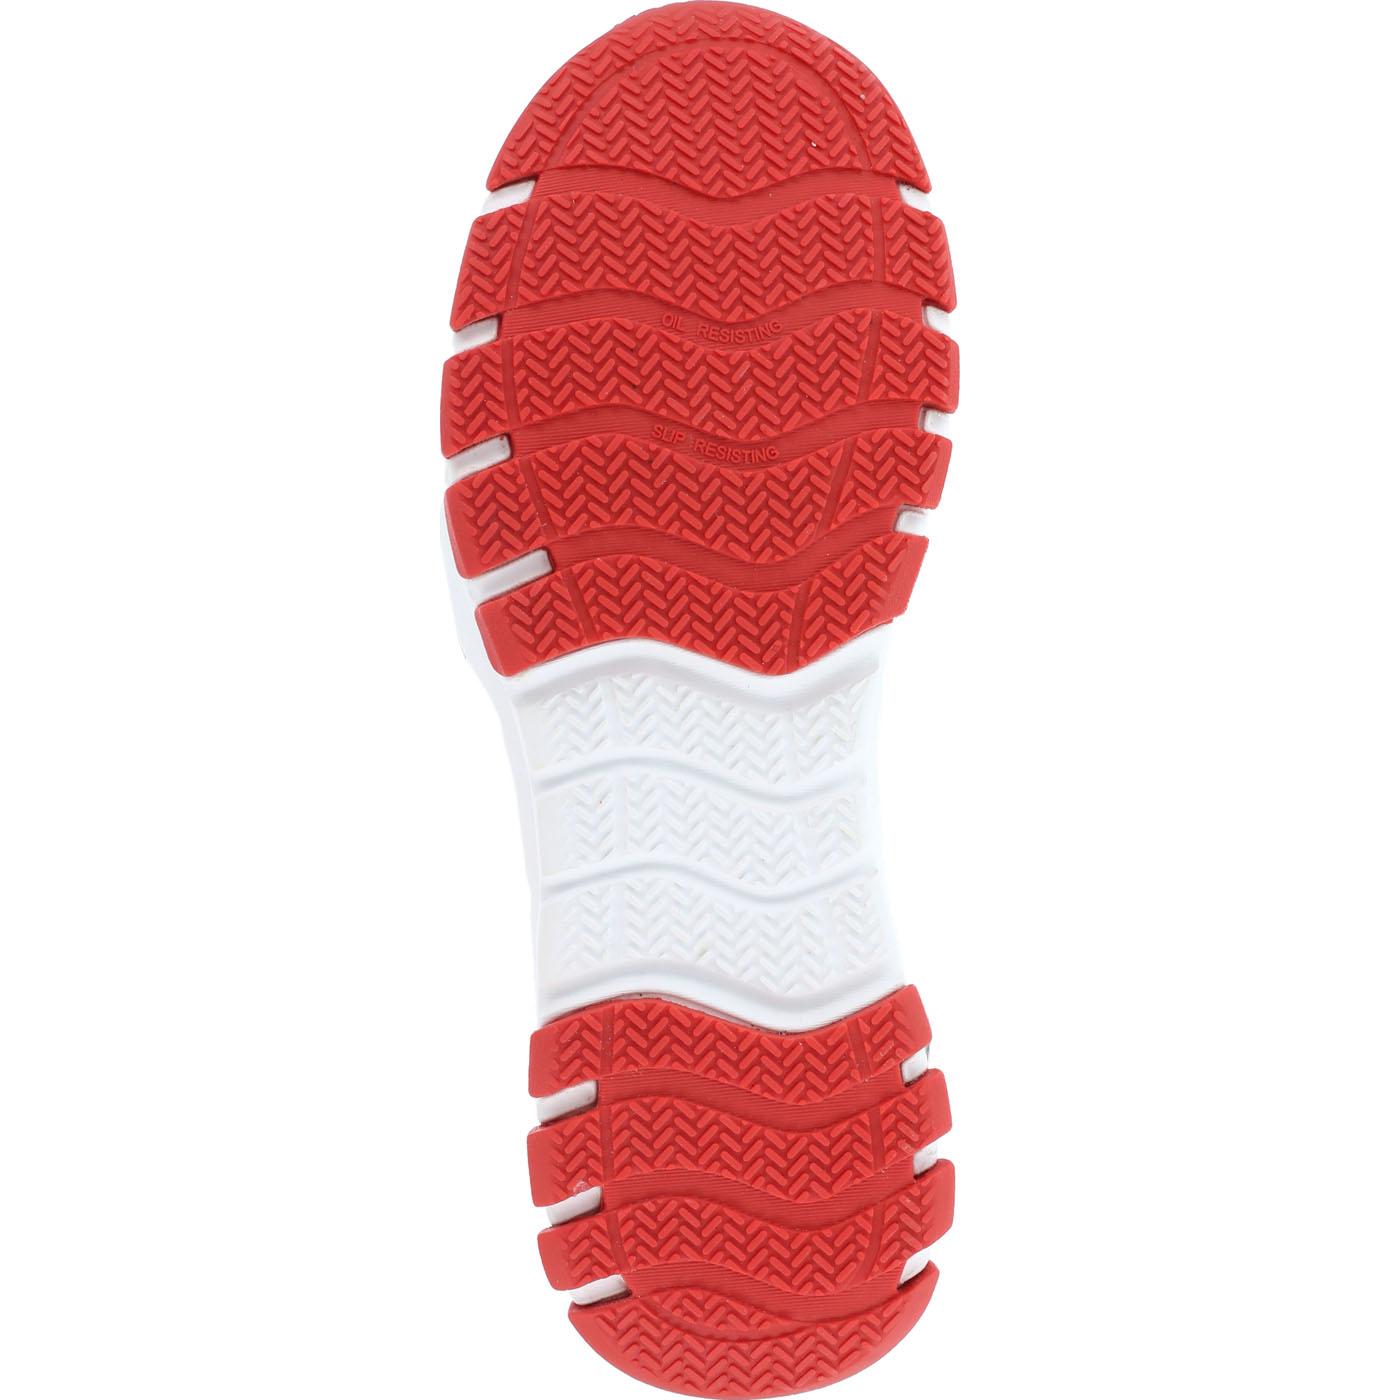 Reebok Sublite Steel Toe Work Athletic Shoe Size 14(W) - image 2 of 4